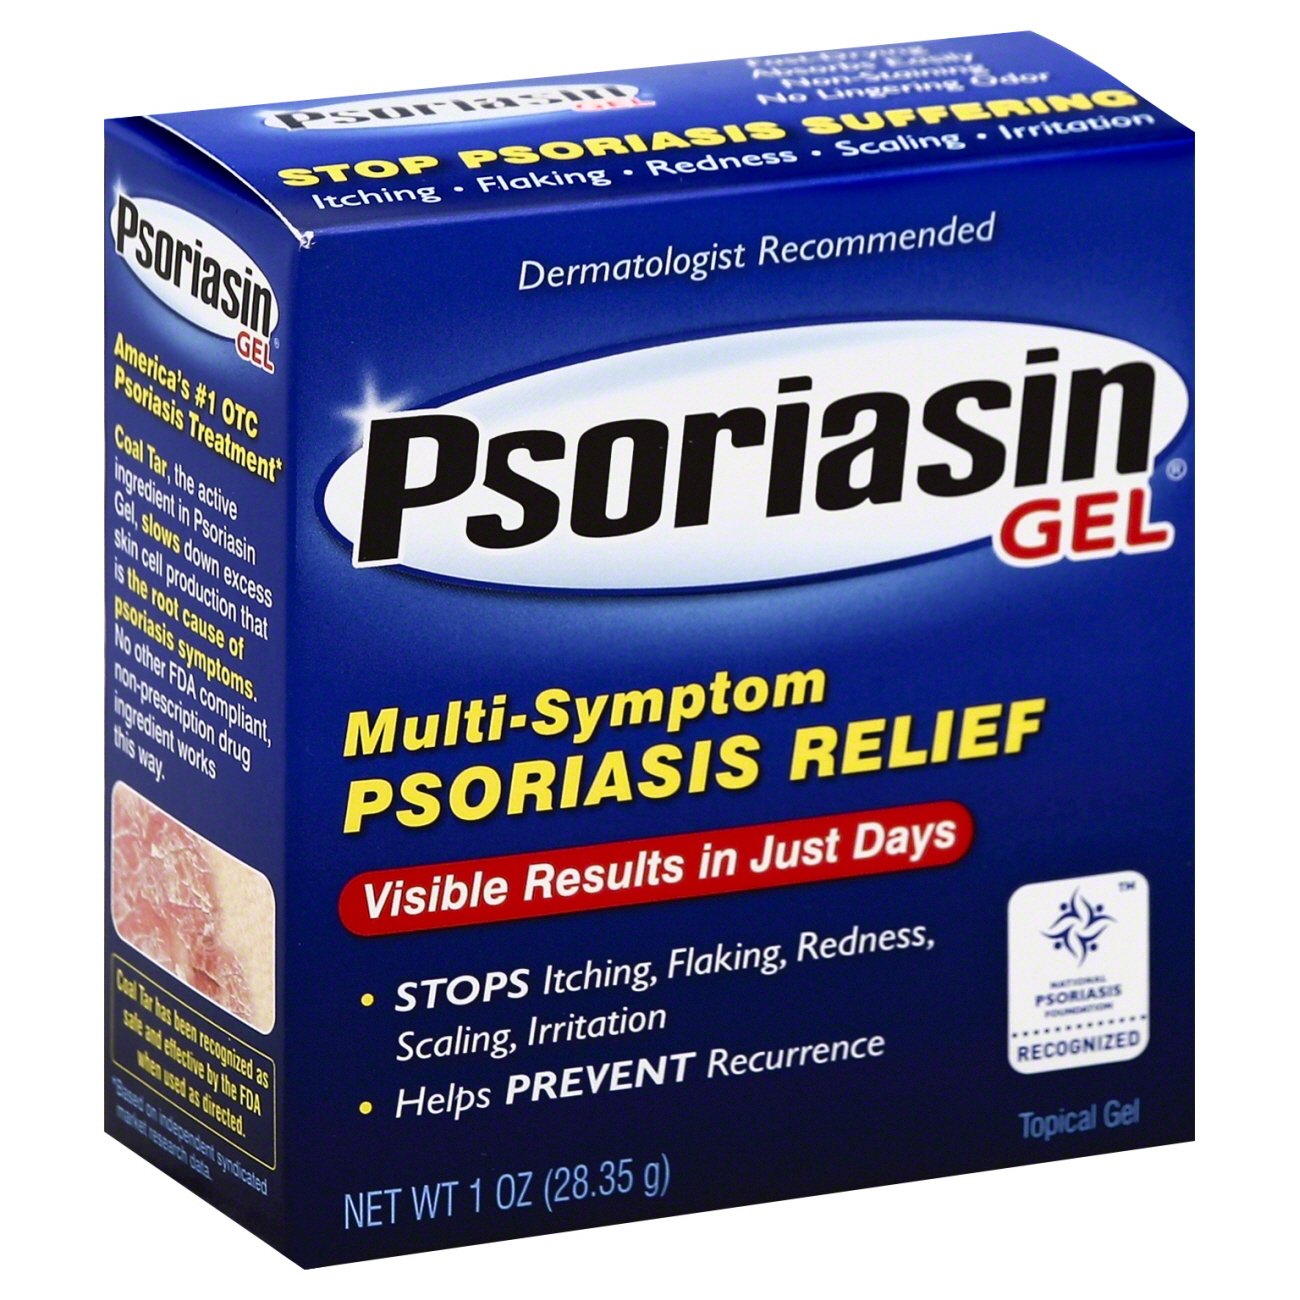 stop psoriasis gel)